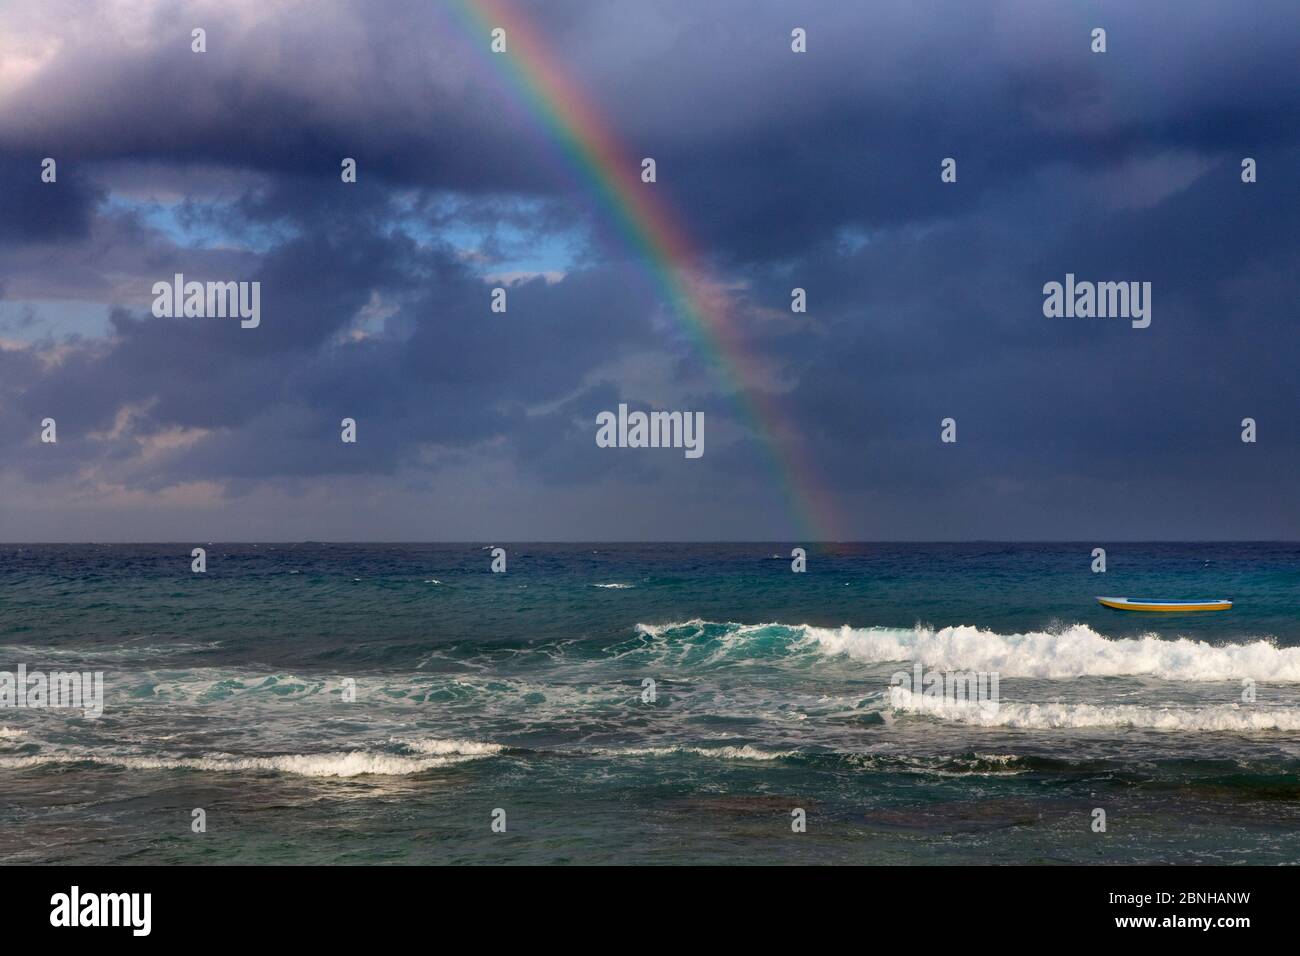 Landscape of West Bay with rainbow, Bay Island, Honduras, Caribbean Ocean. Stock Photo